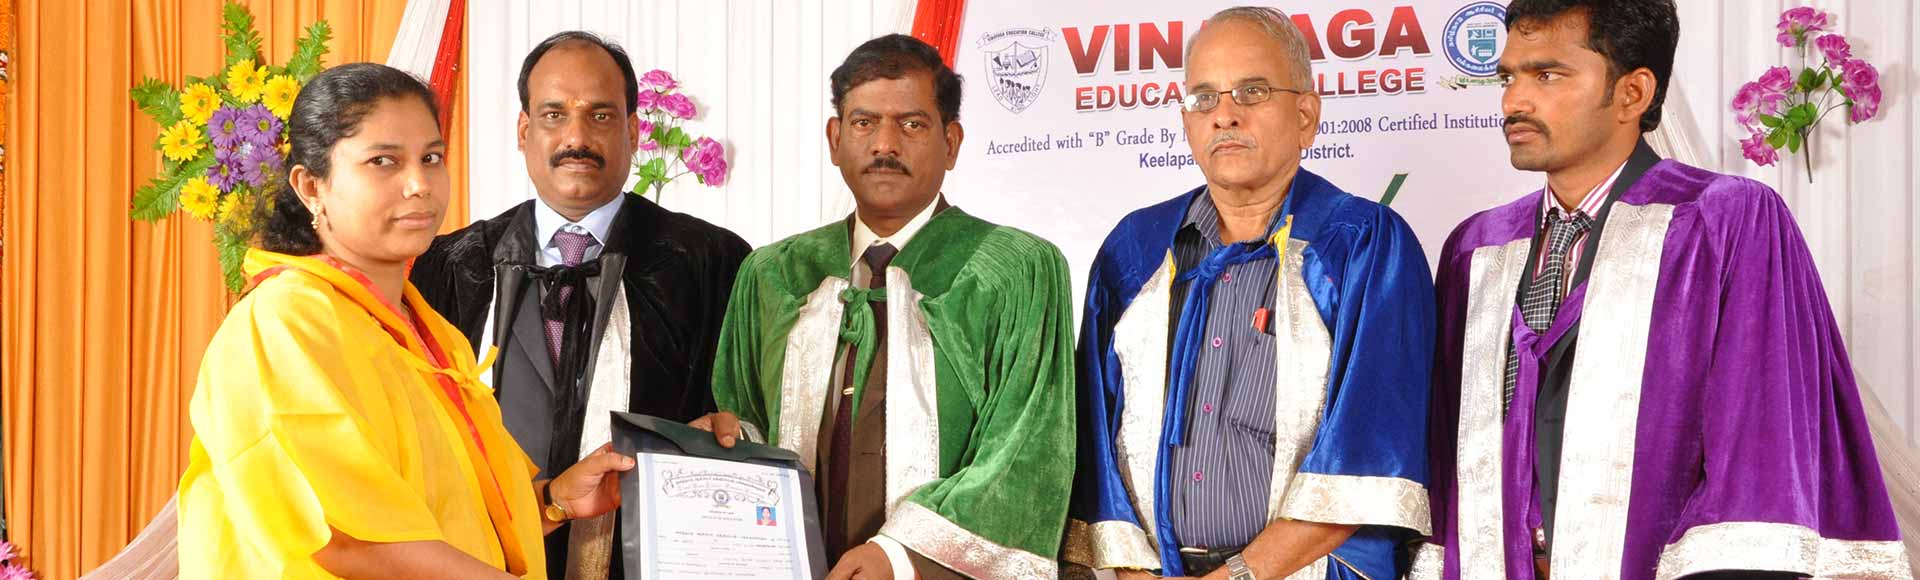 Vinayaga Education College